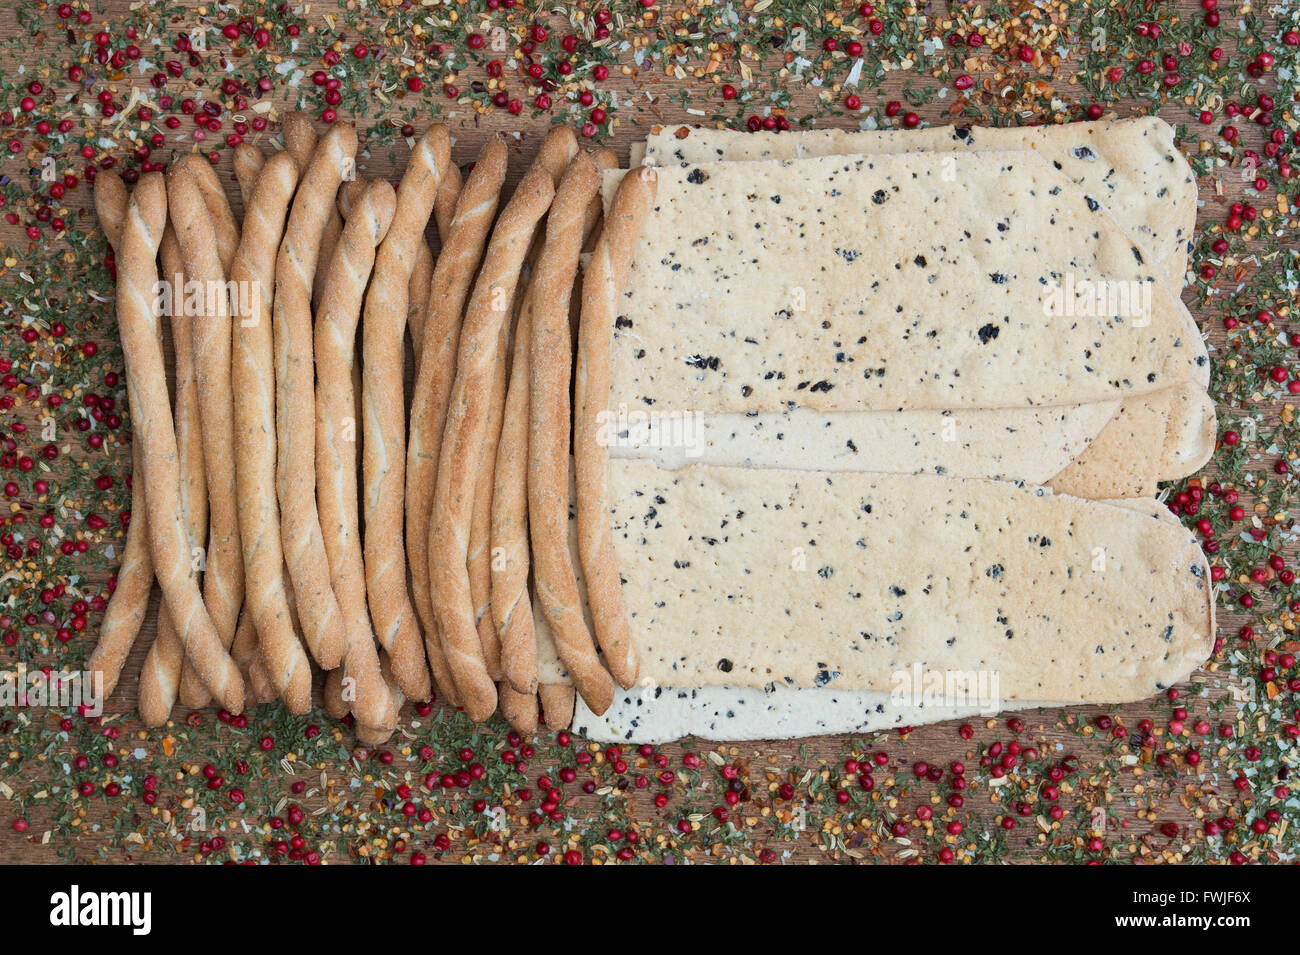 Italian Crispy flatbread / Croccante and Sesame rubato breadsticks on a dried herb and spice background Stock Photo